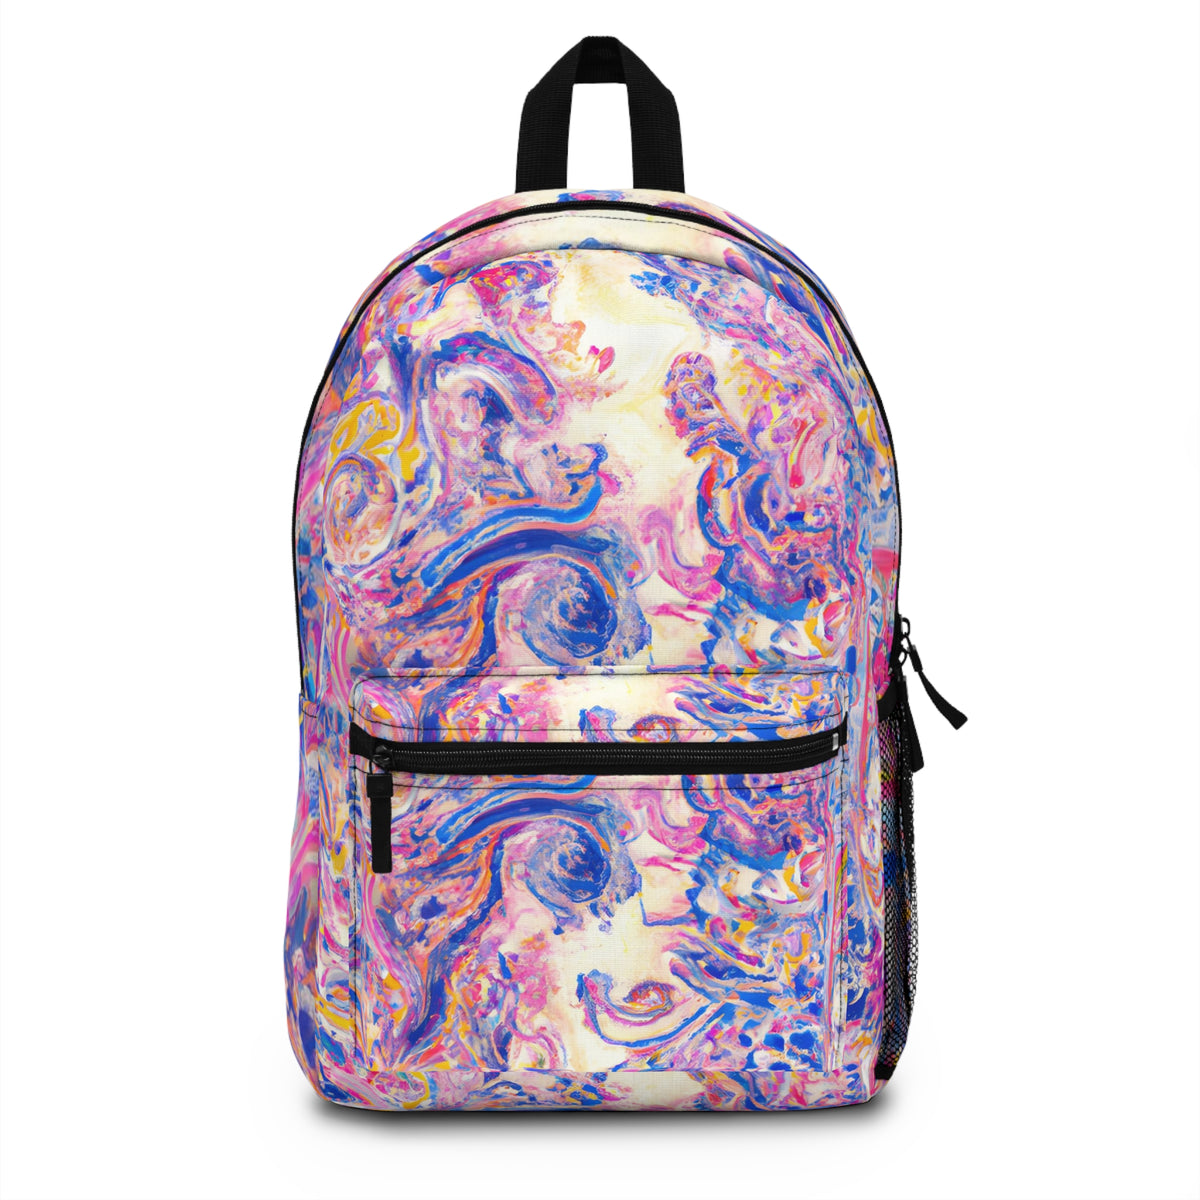 FlameVixen - Gay-Inspired Backpack